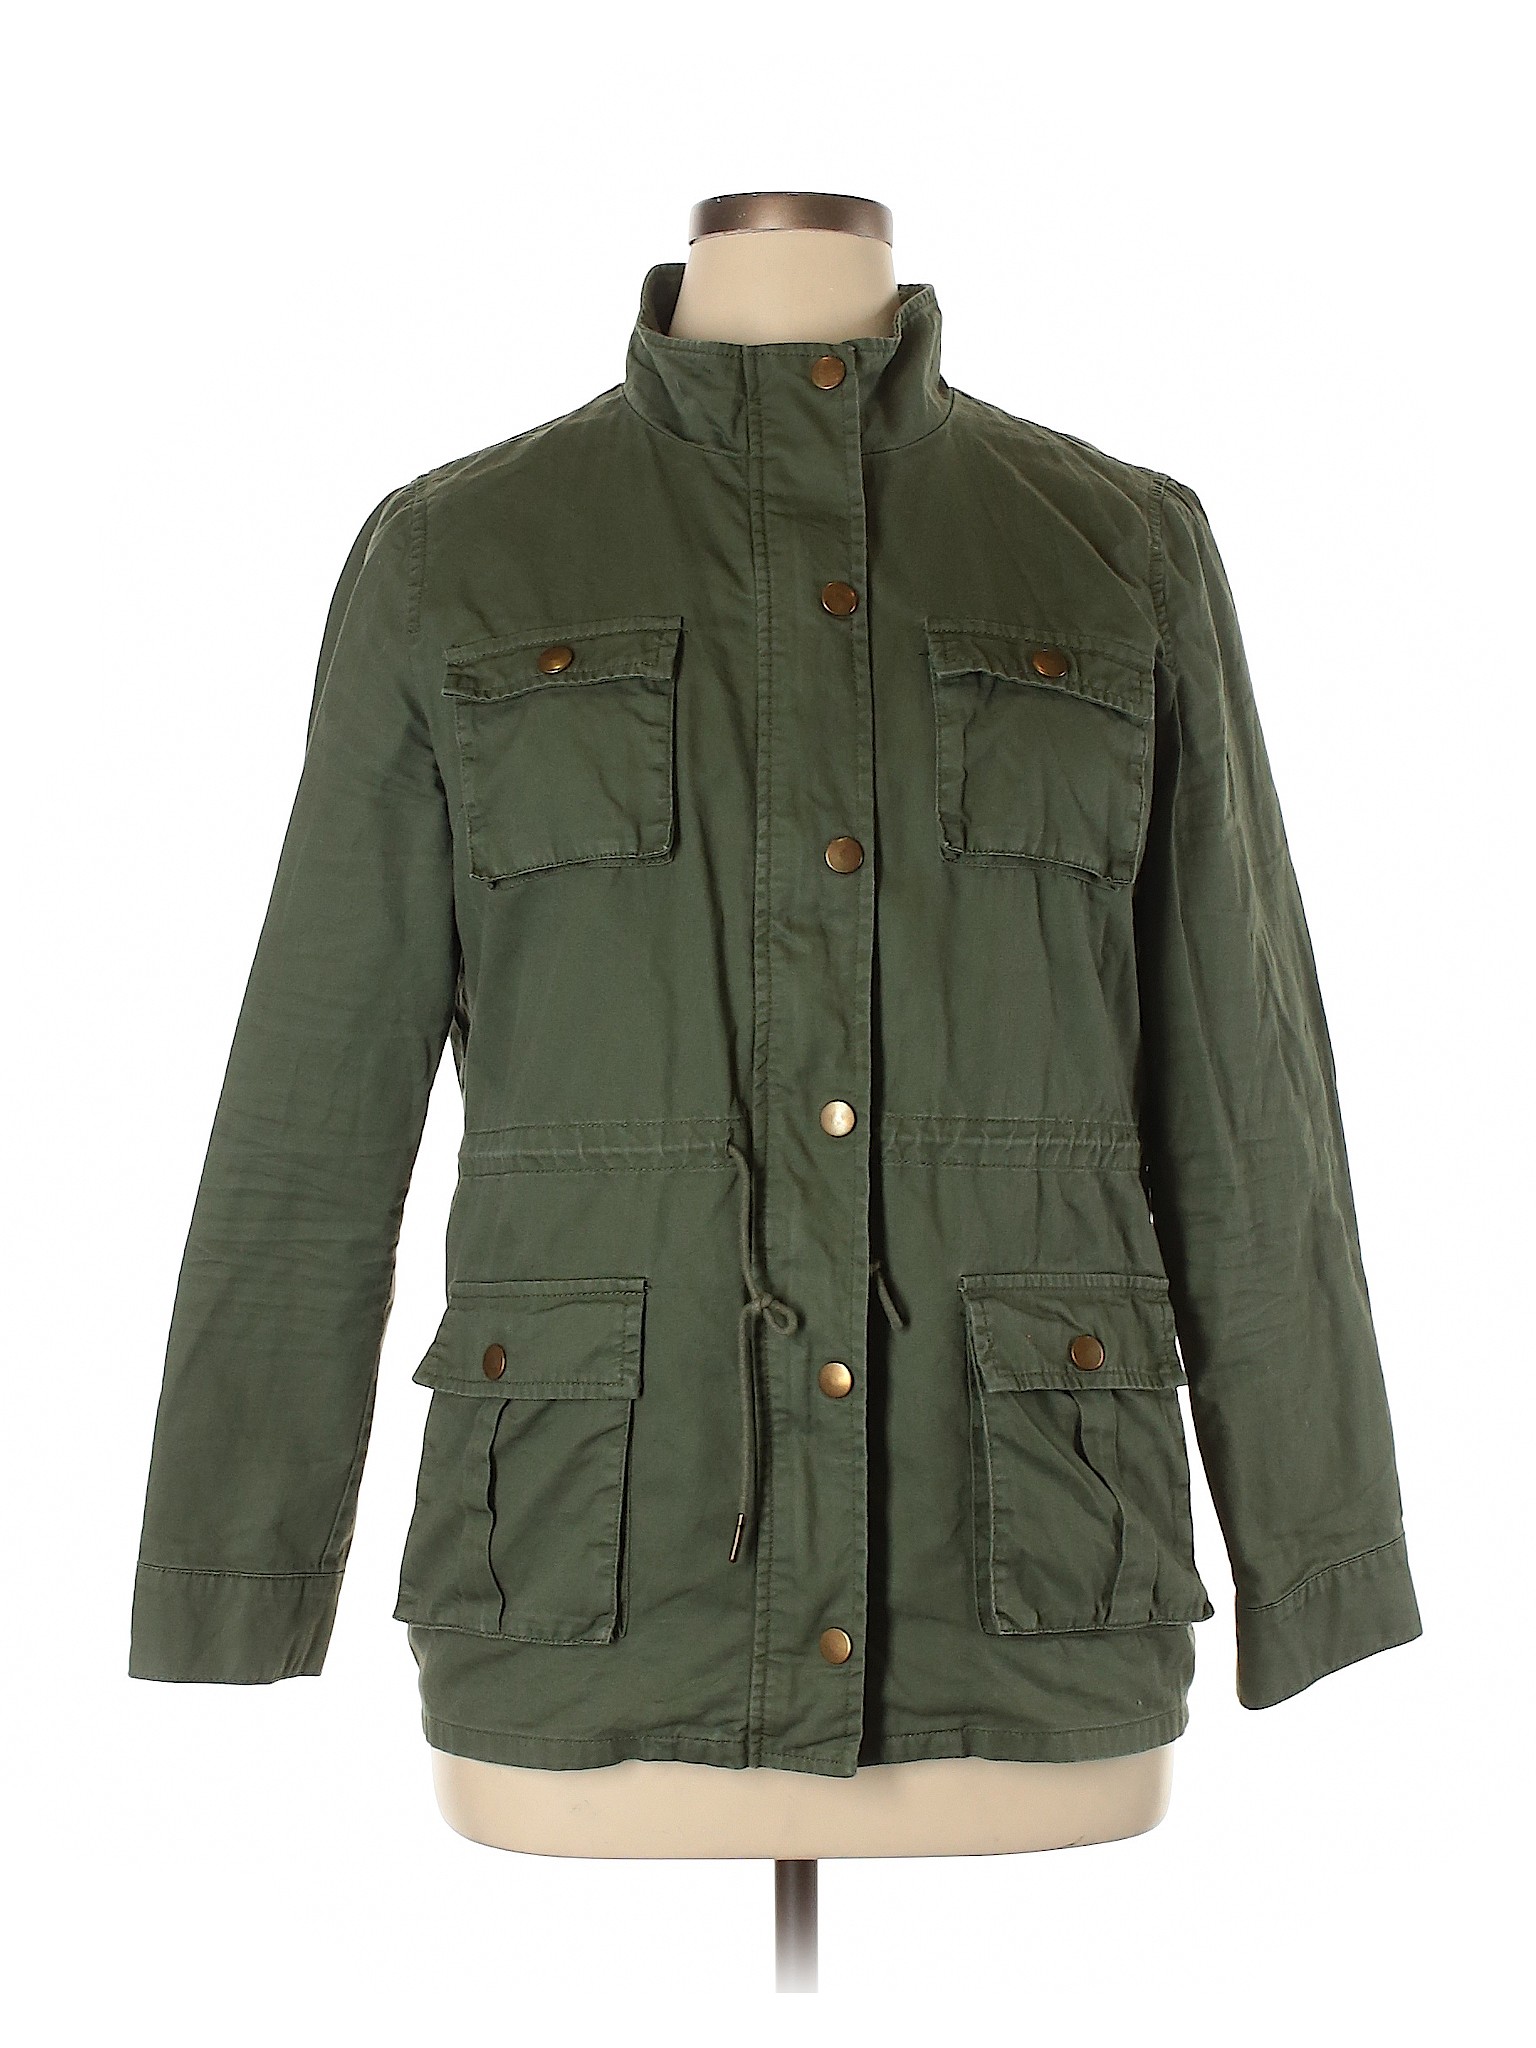 Market and Spruce Women Green Jacket XL | eBay